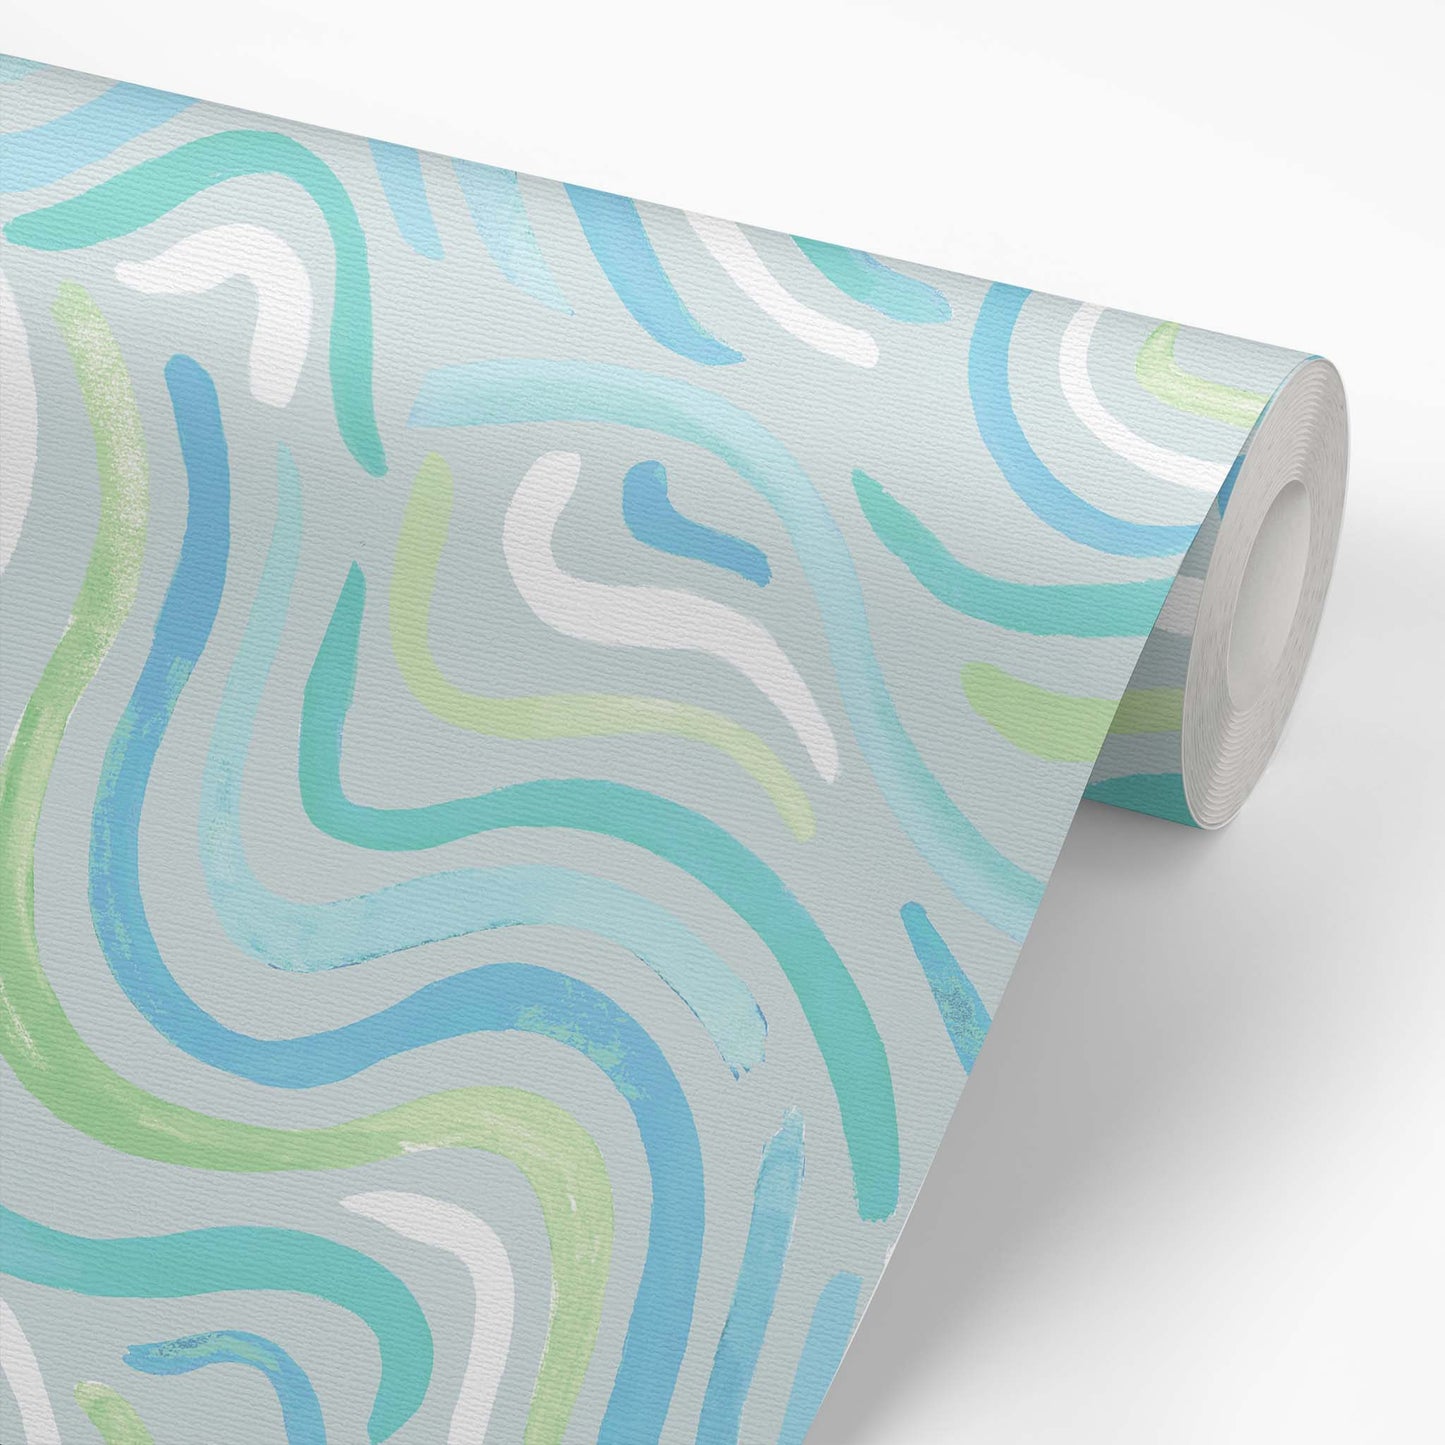 Wallpaper panel featuring Iris + Sea Modern Rainbow- Turquoise Peel and Stick Wallpaper - a modern pattern